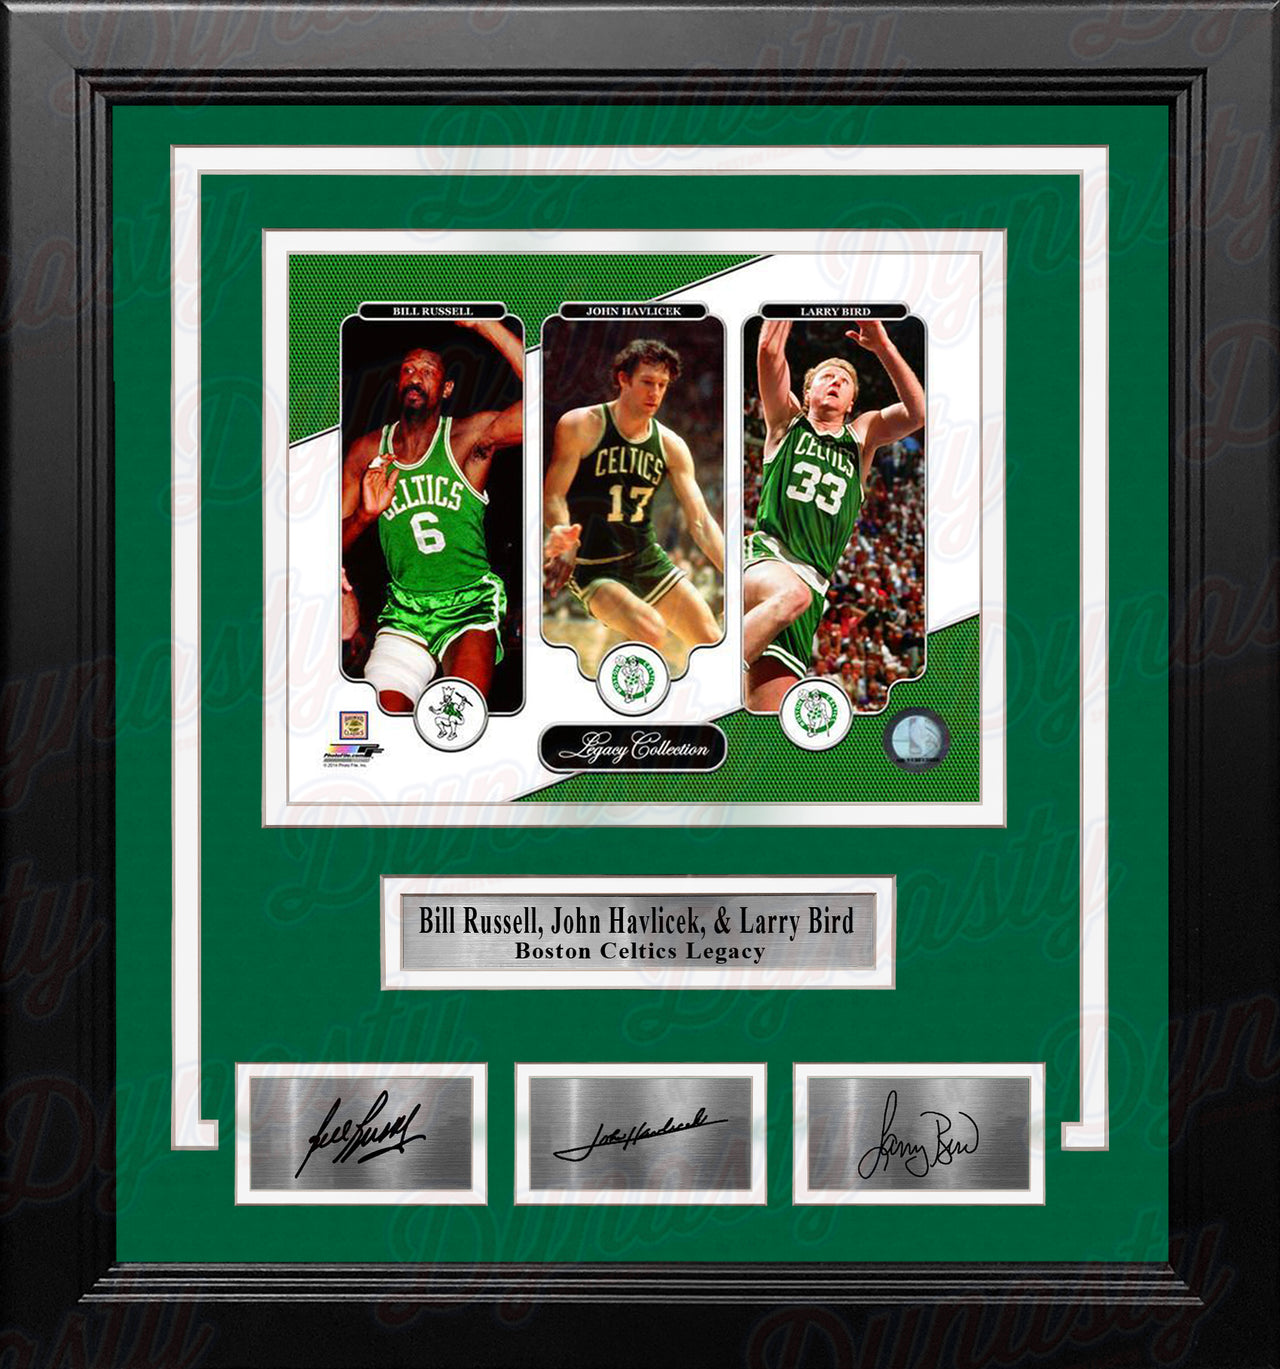 Bill Russell, John Havlicek, & Larry Bird Boston Celtics 8x10 Framed Photo with Engraved Autographs - Dynasty Sports & Framing 